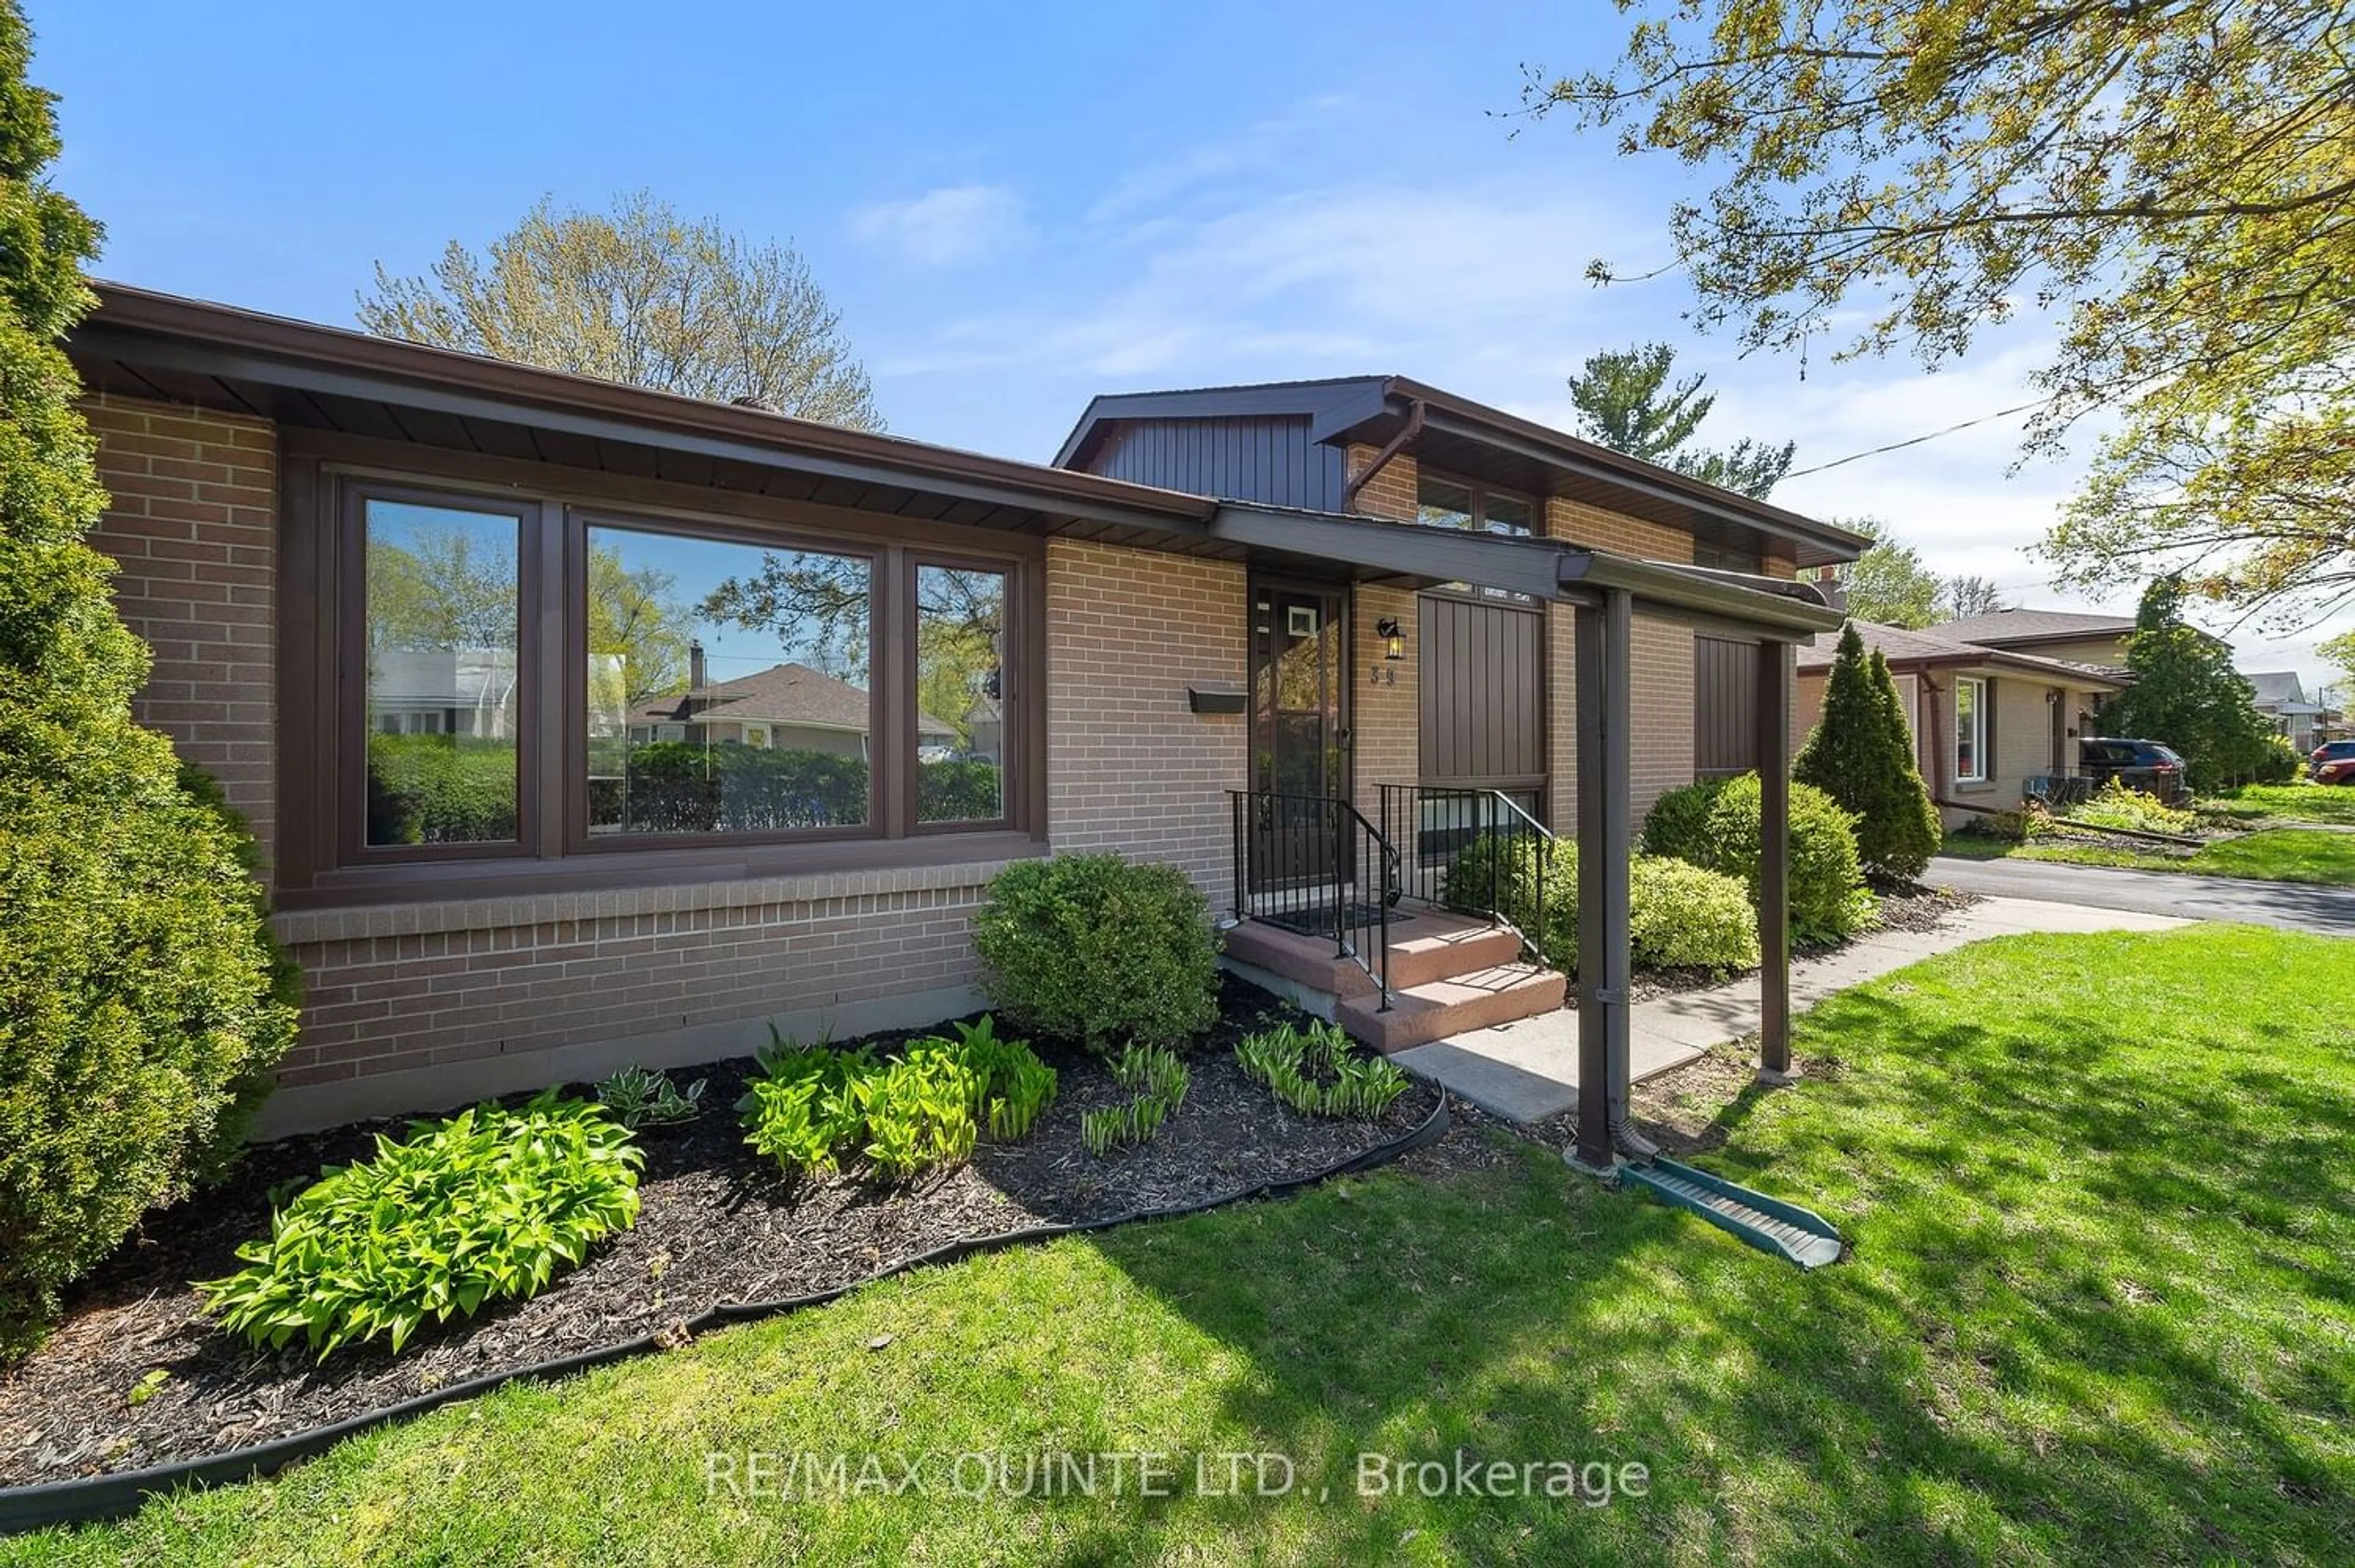 Home with brick exterior material for 39 Lambert Dr, Belleville Ontario K8N 4K5